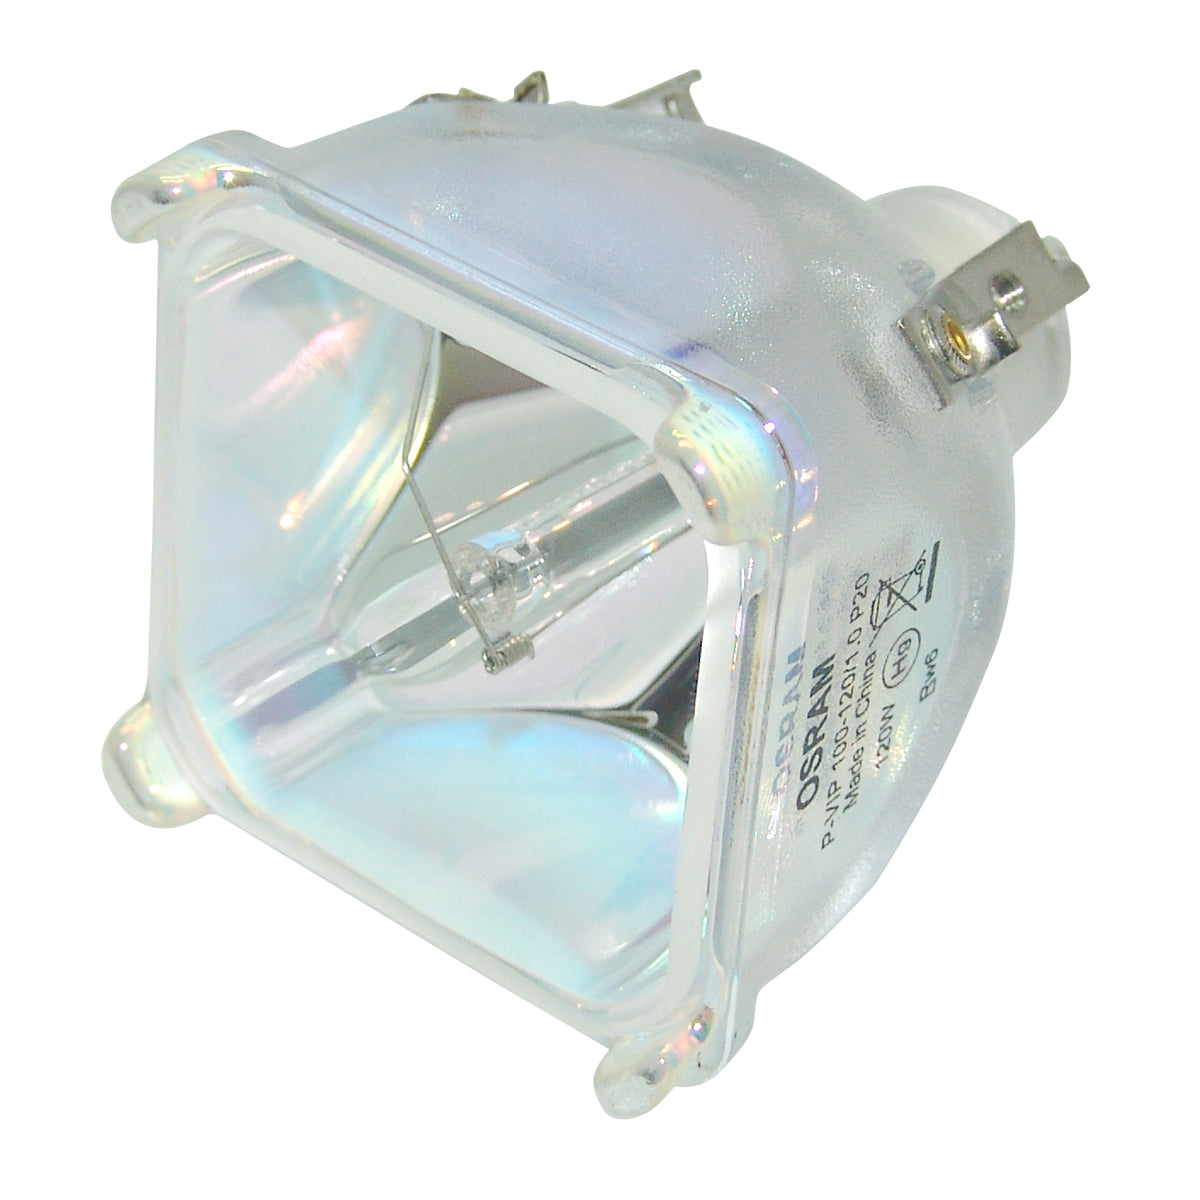 Viewsonic RLC-150-003 Osram Projector Bare Lamp